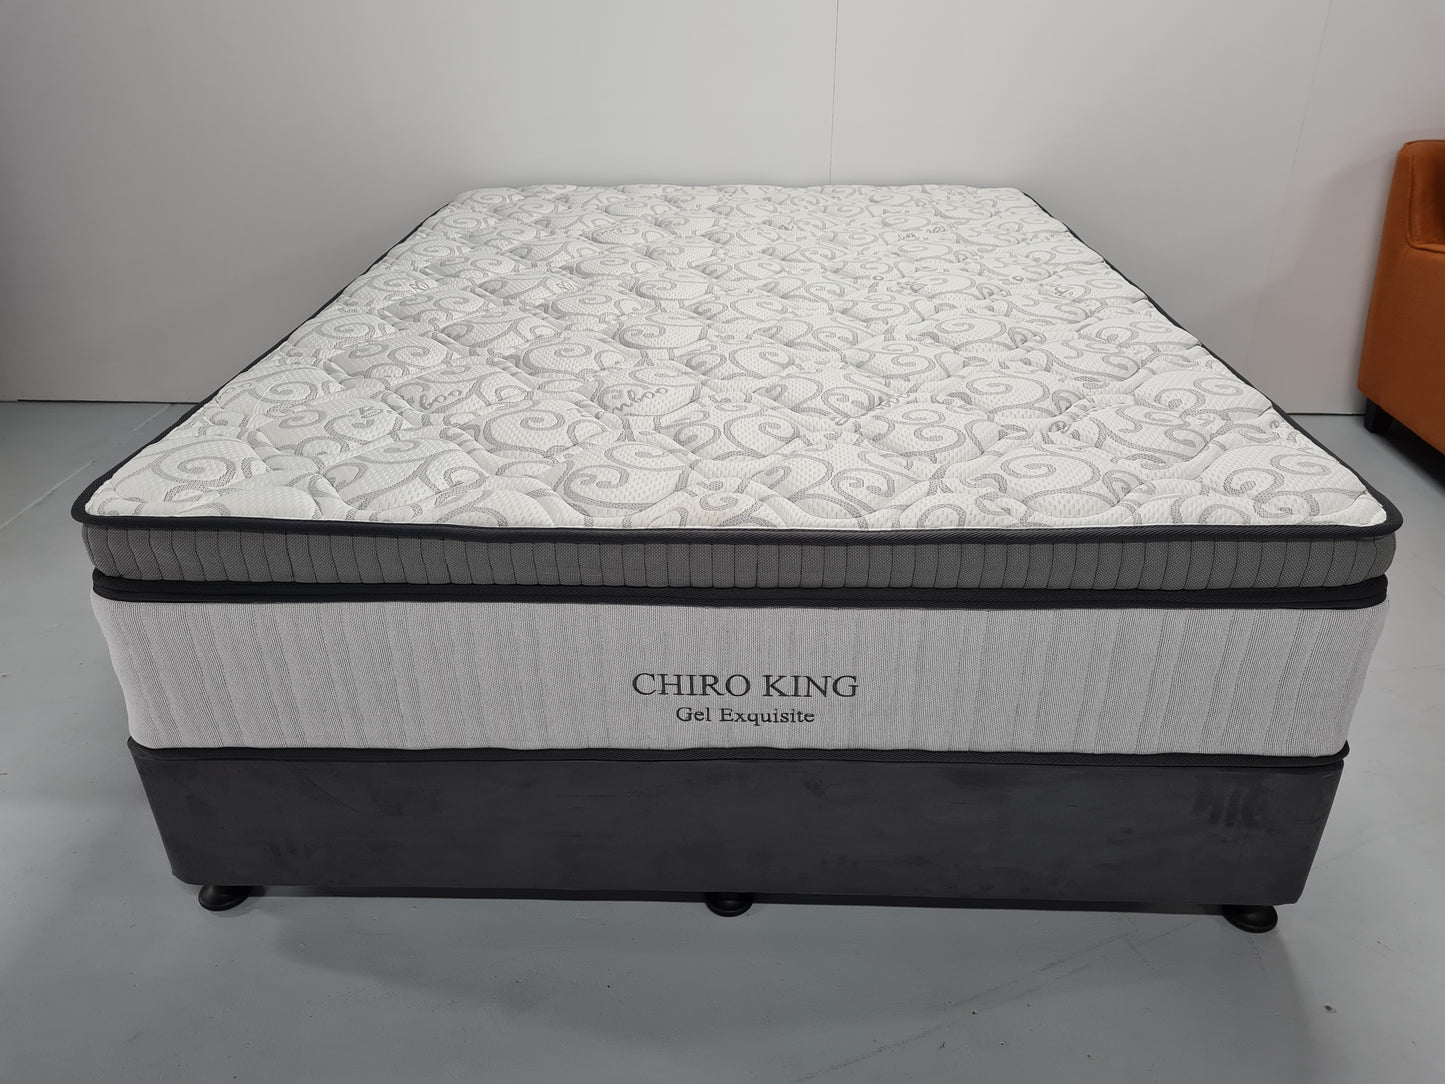 Chiro King Gel Exquisite Mattress